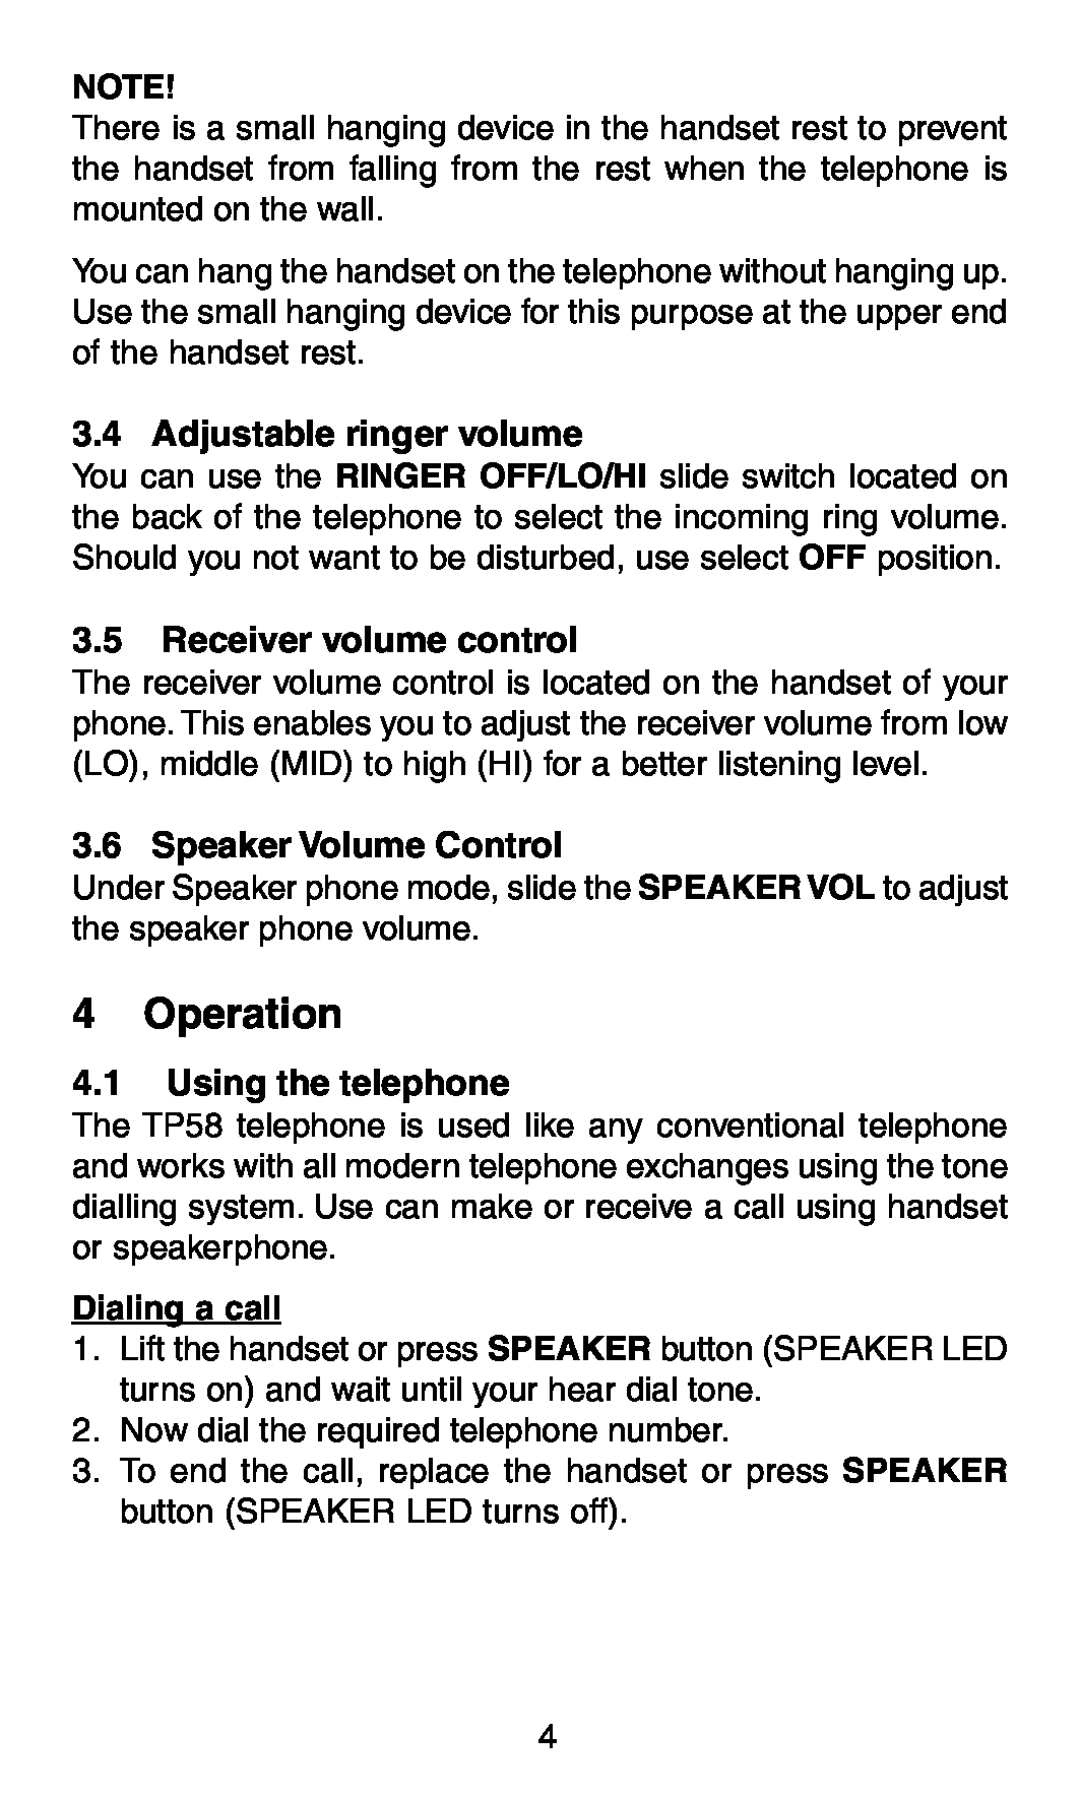 Oricom TP58 Operation, Adjustable ringer volume, Receiver volume control, Speaker Volume Control, Using the telephone 